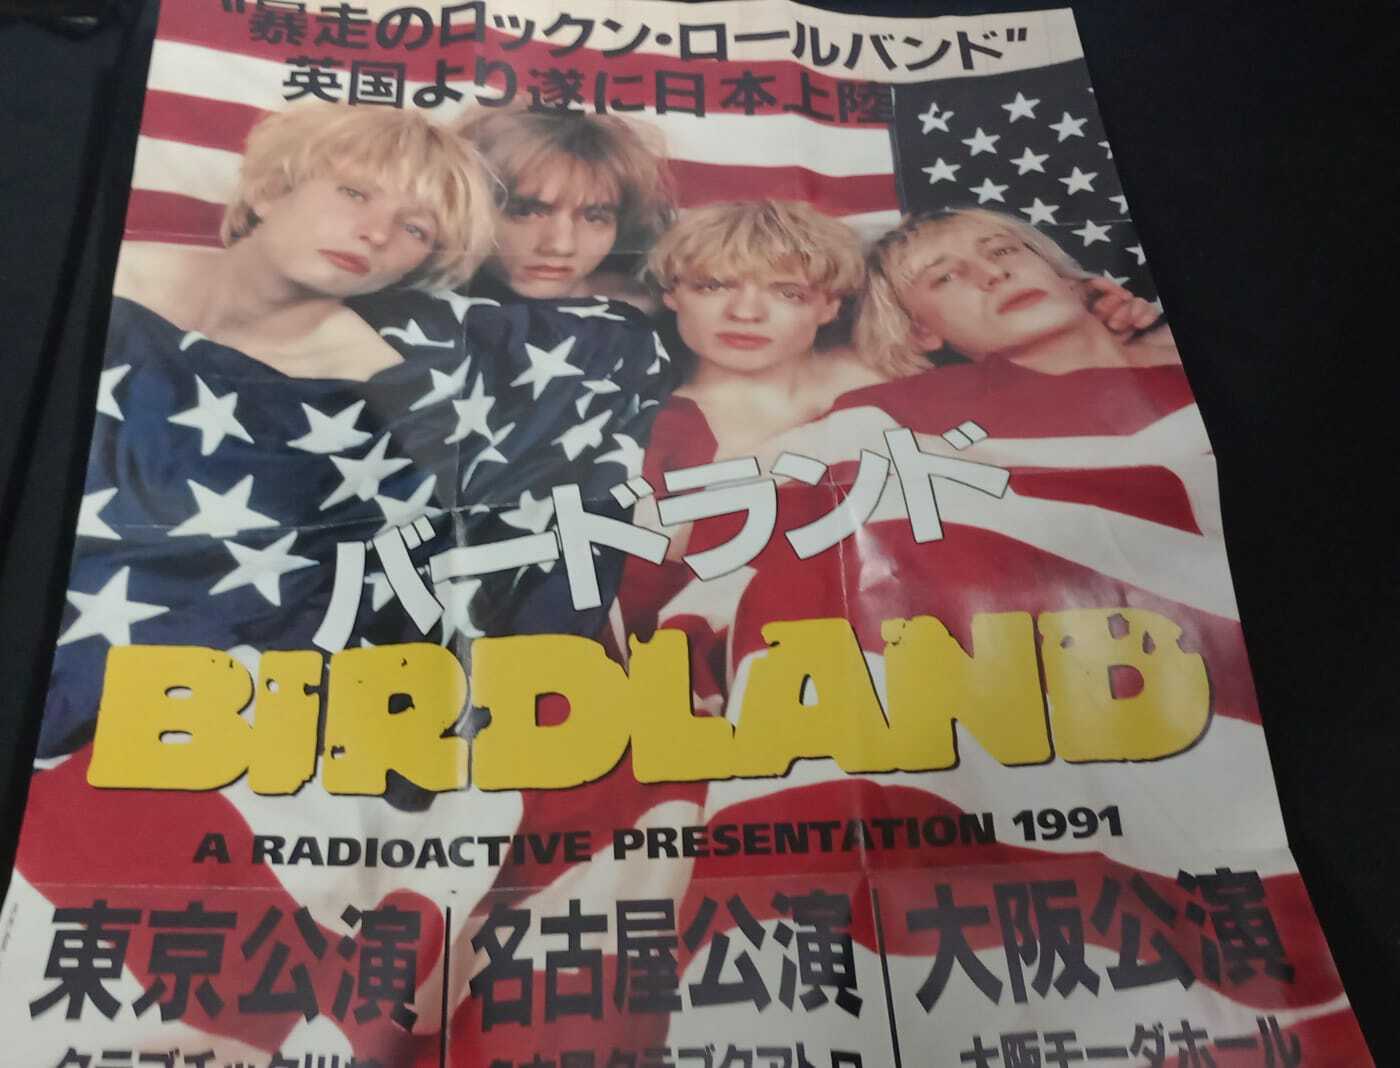 CD - Birdland - 1991 (usa)